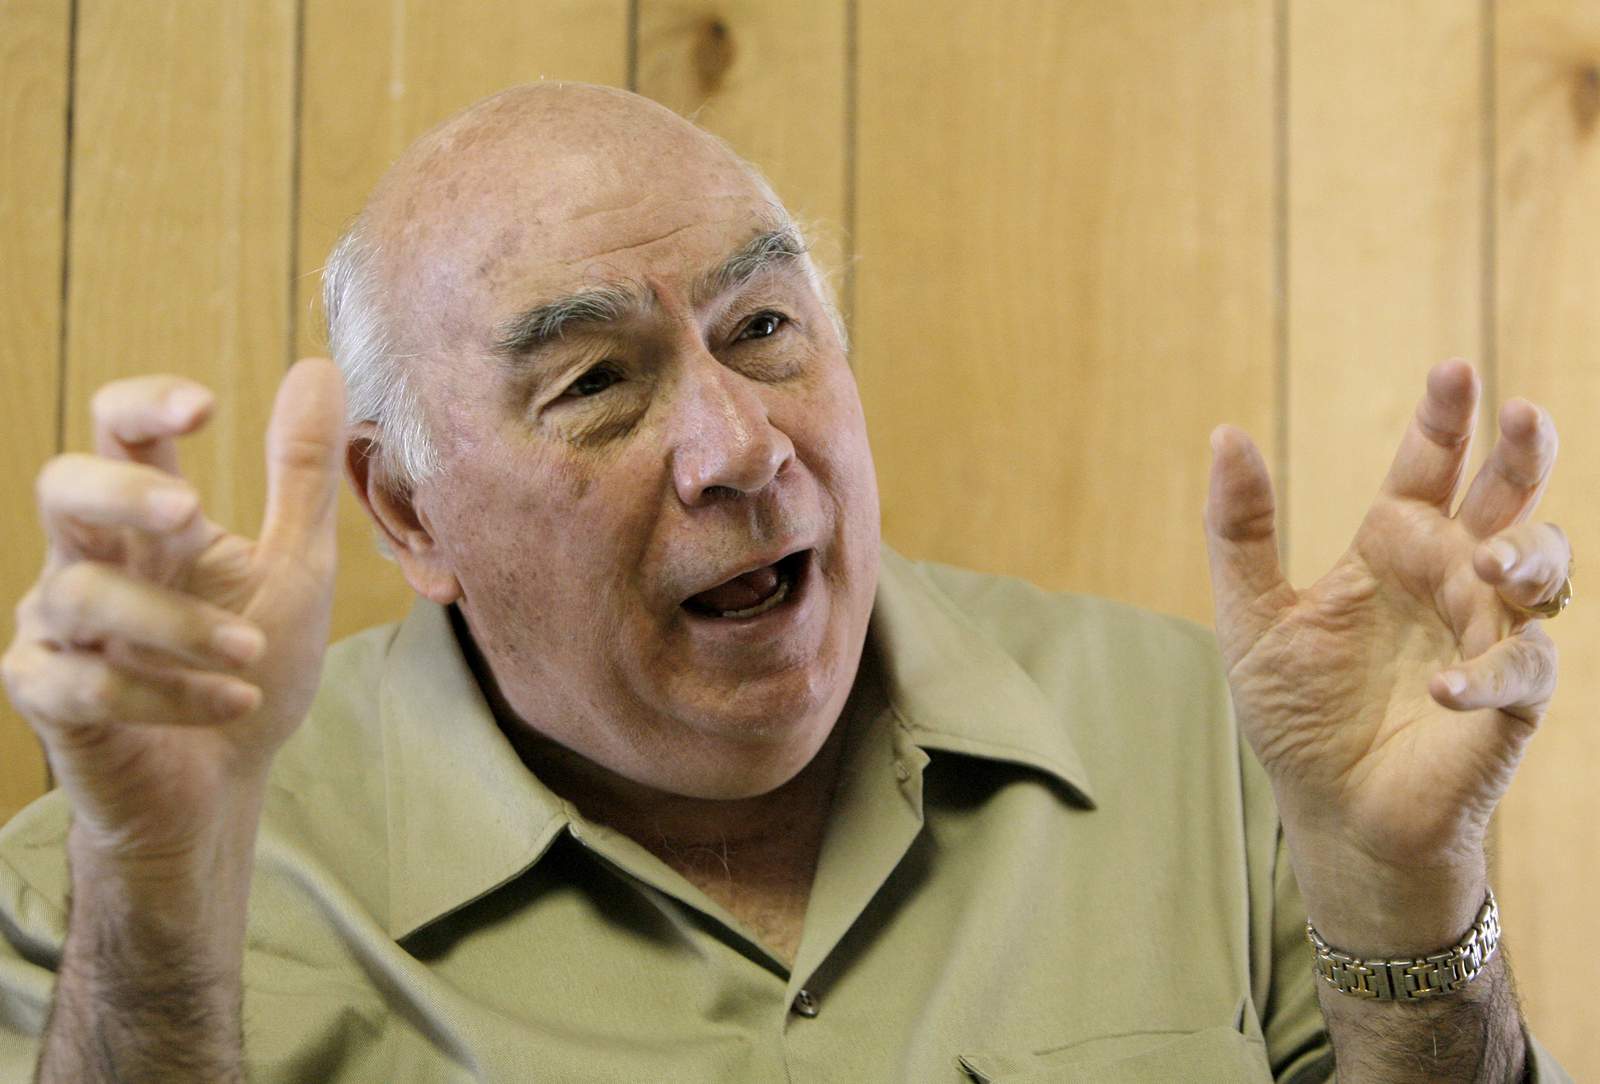 Coal magnate Robert Murray dead at 80, days after retiring